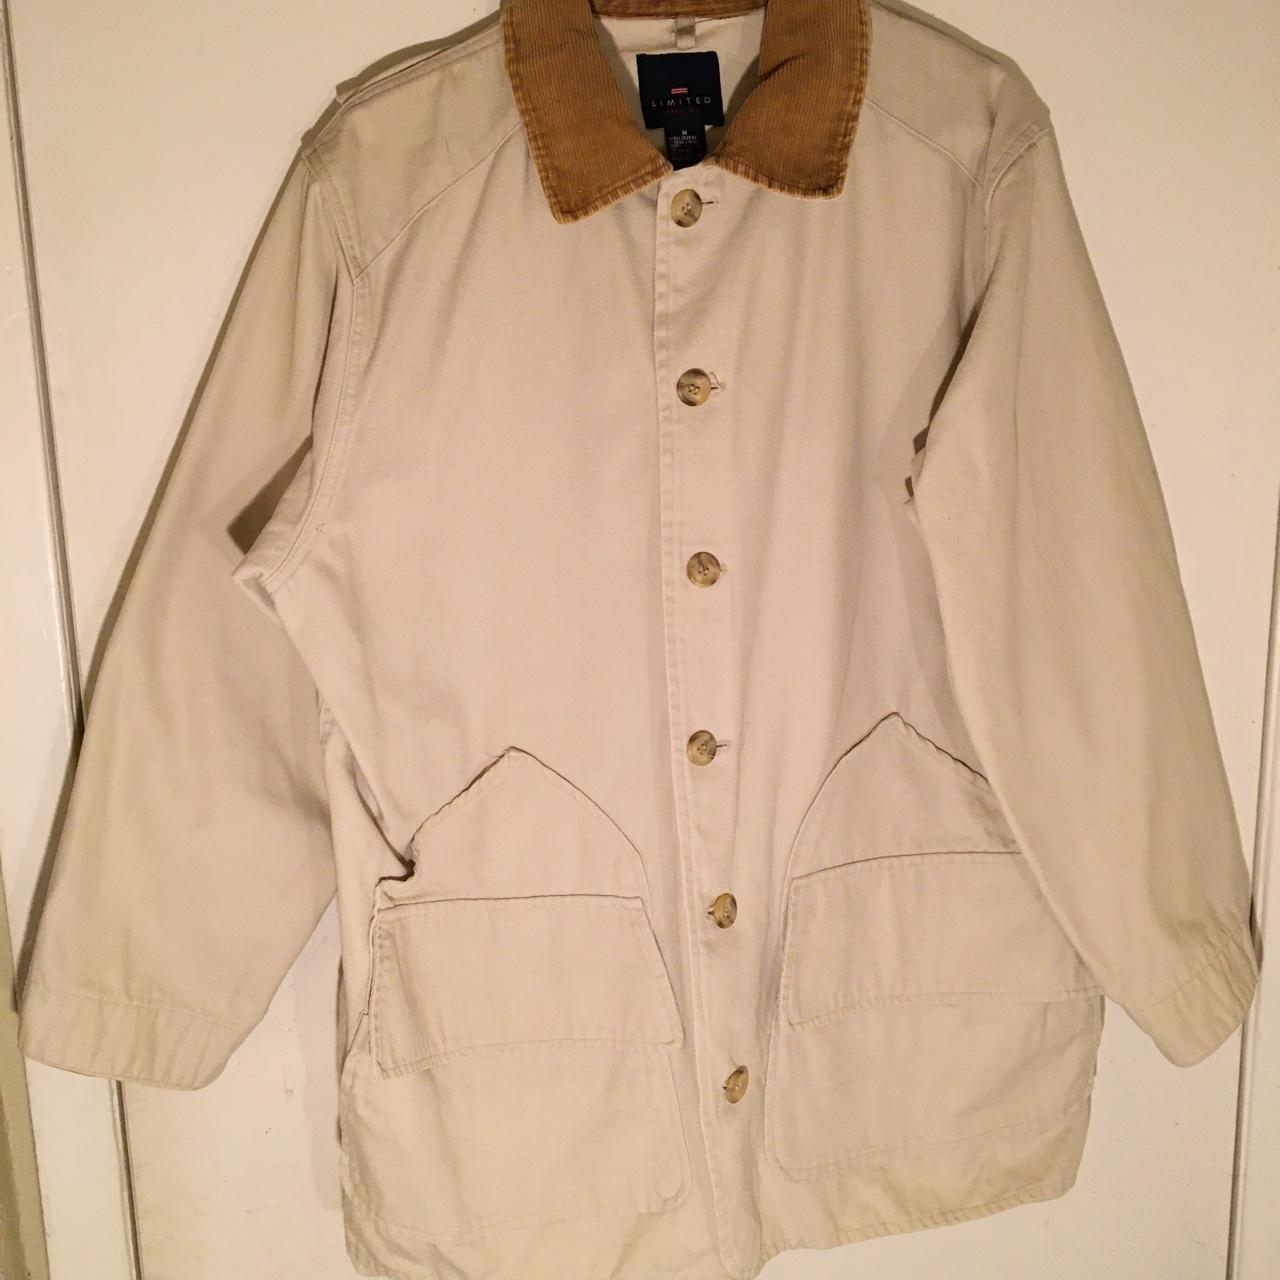 Vintage cathart work jacket 🧥 #Cathartt... - Depop